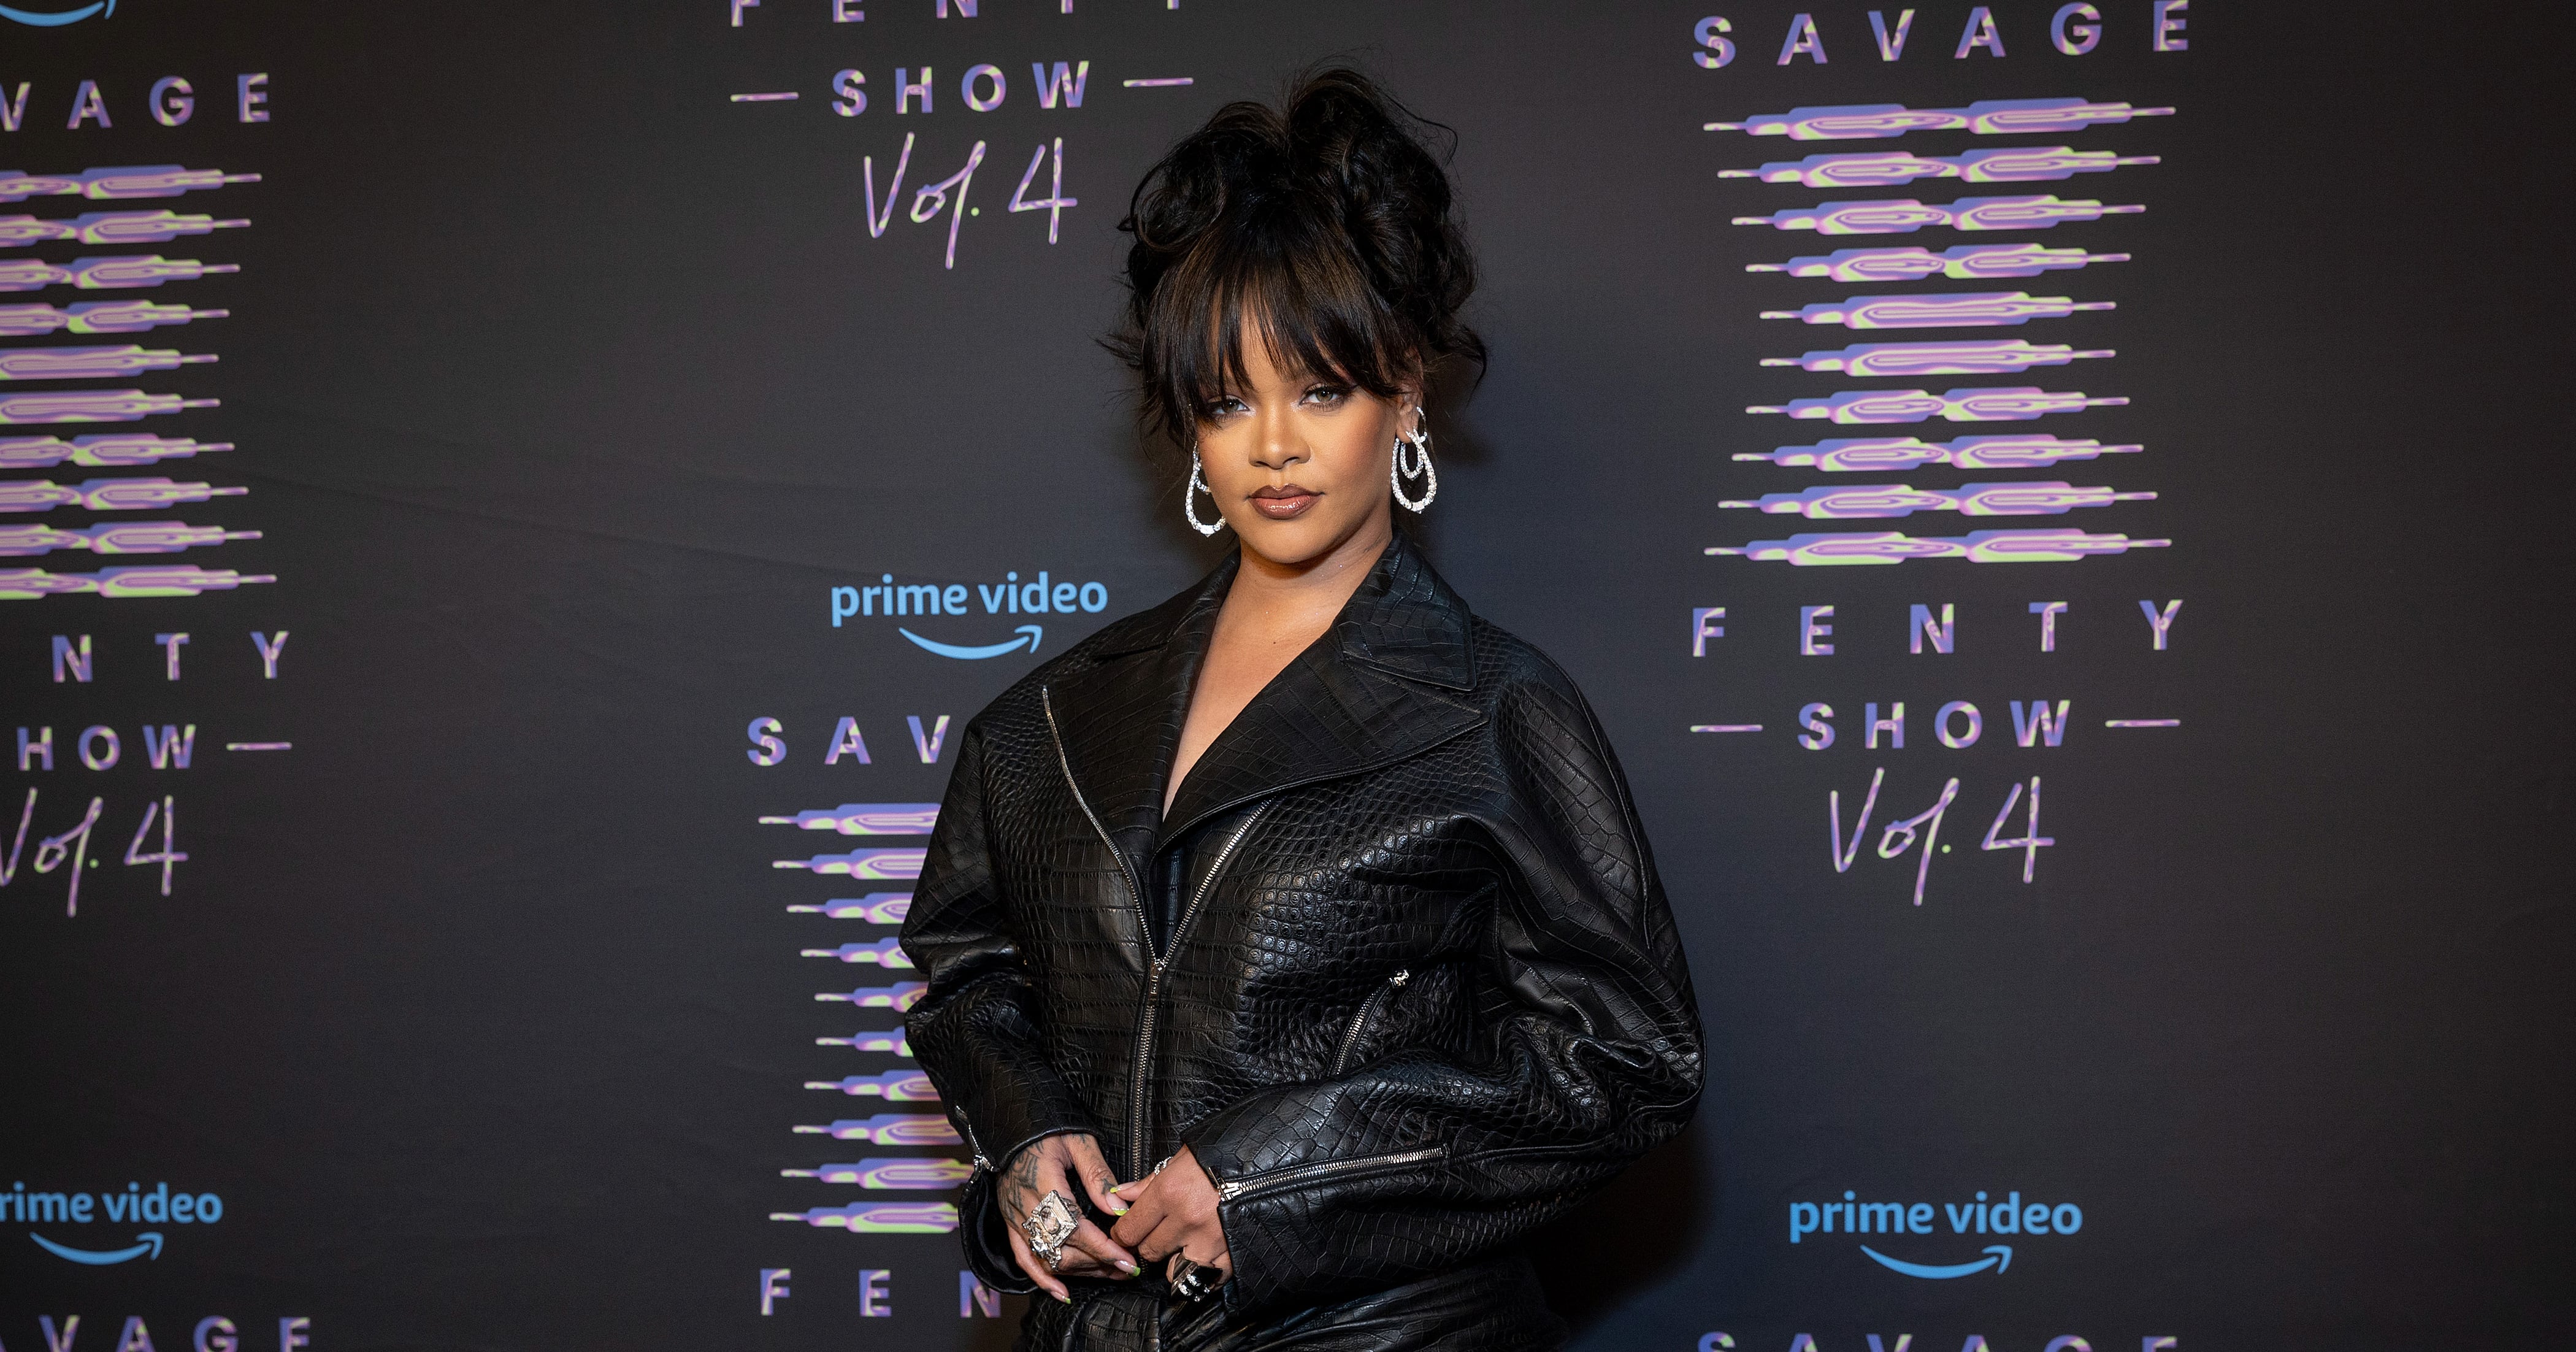 Rihanna Opens Fenty Beauty House for TikTok Content Creators